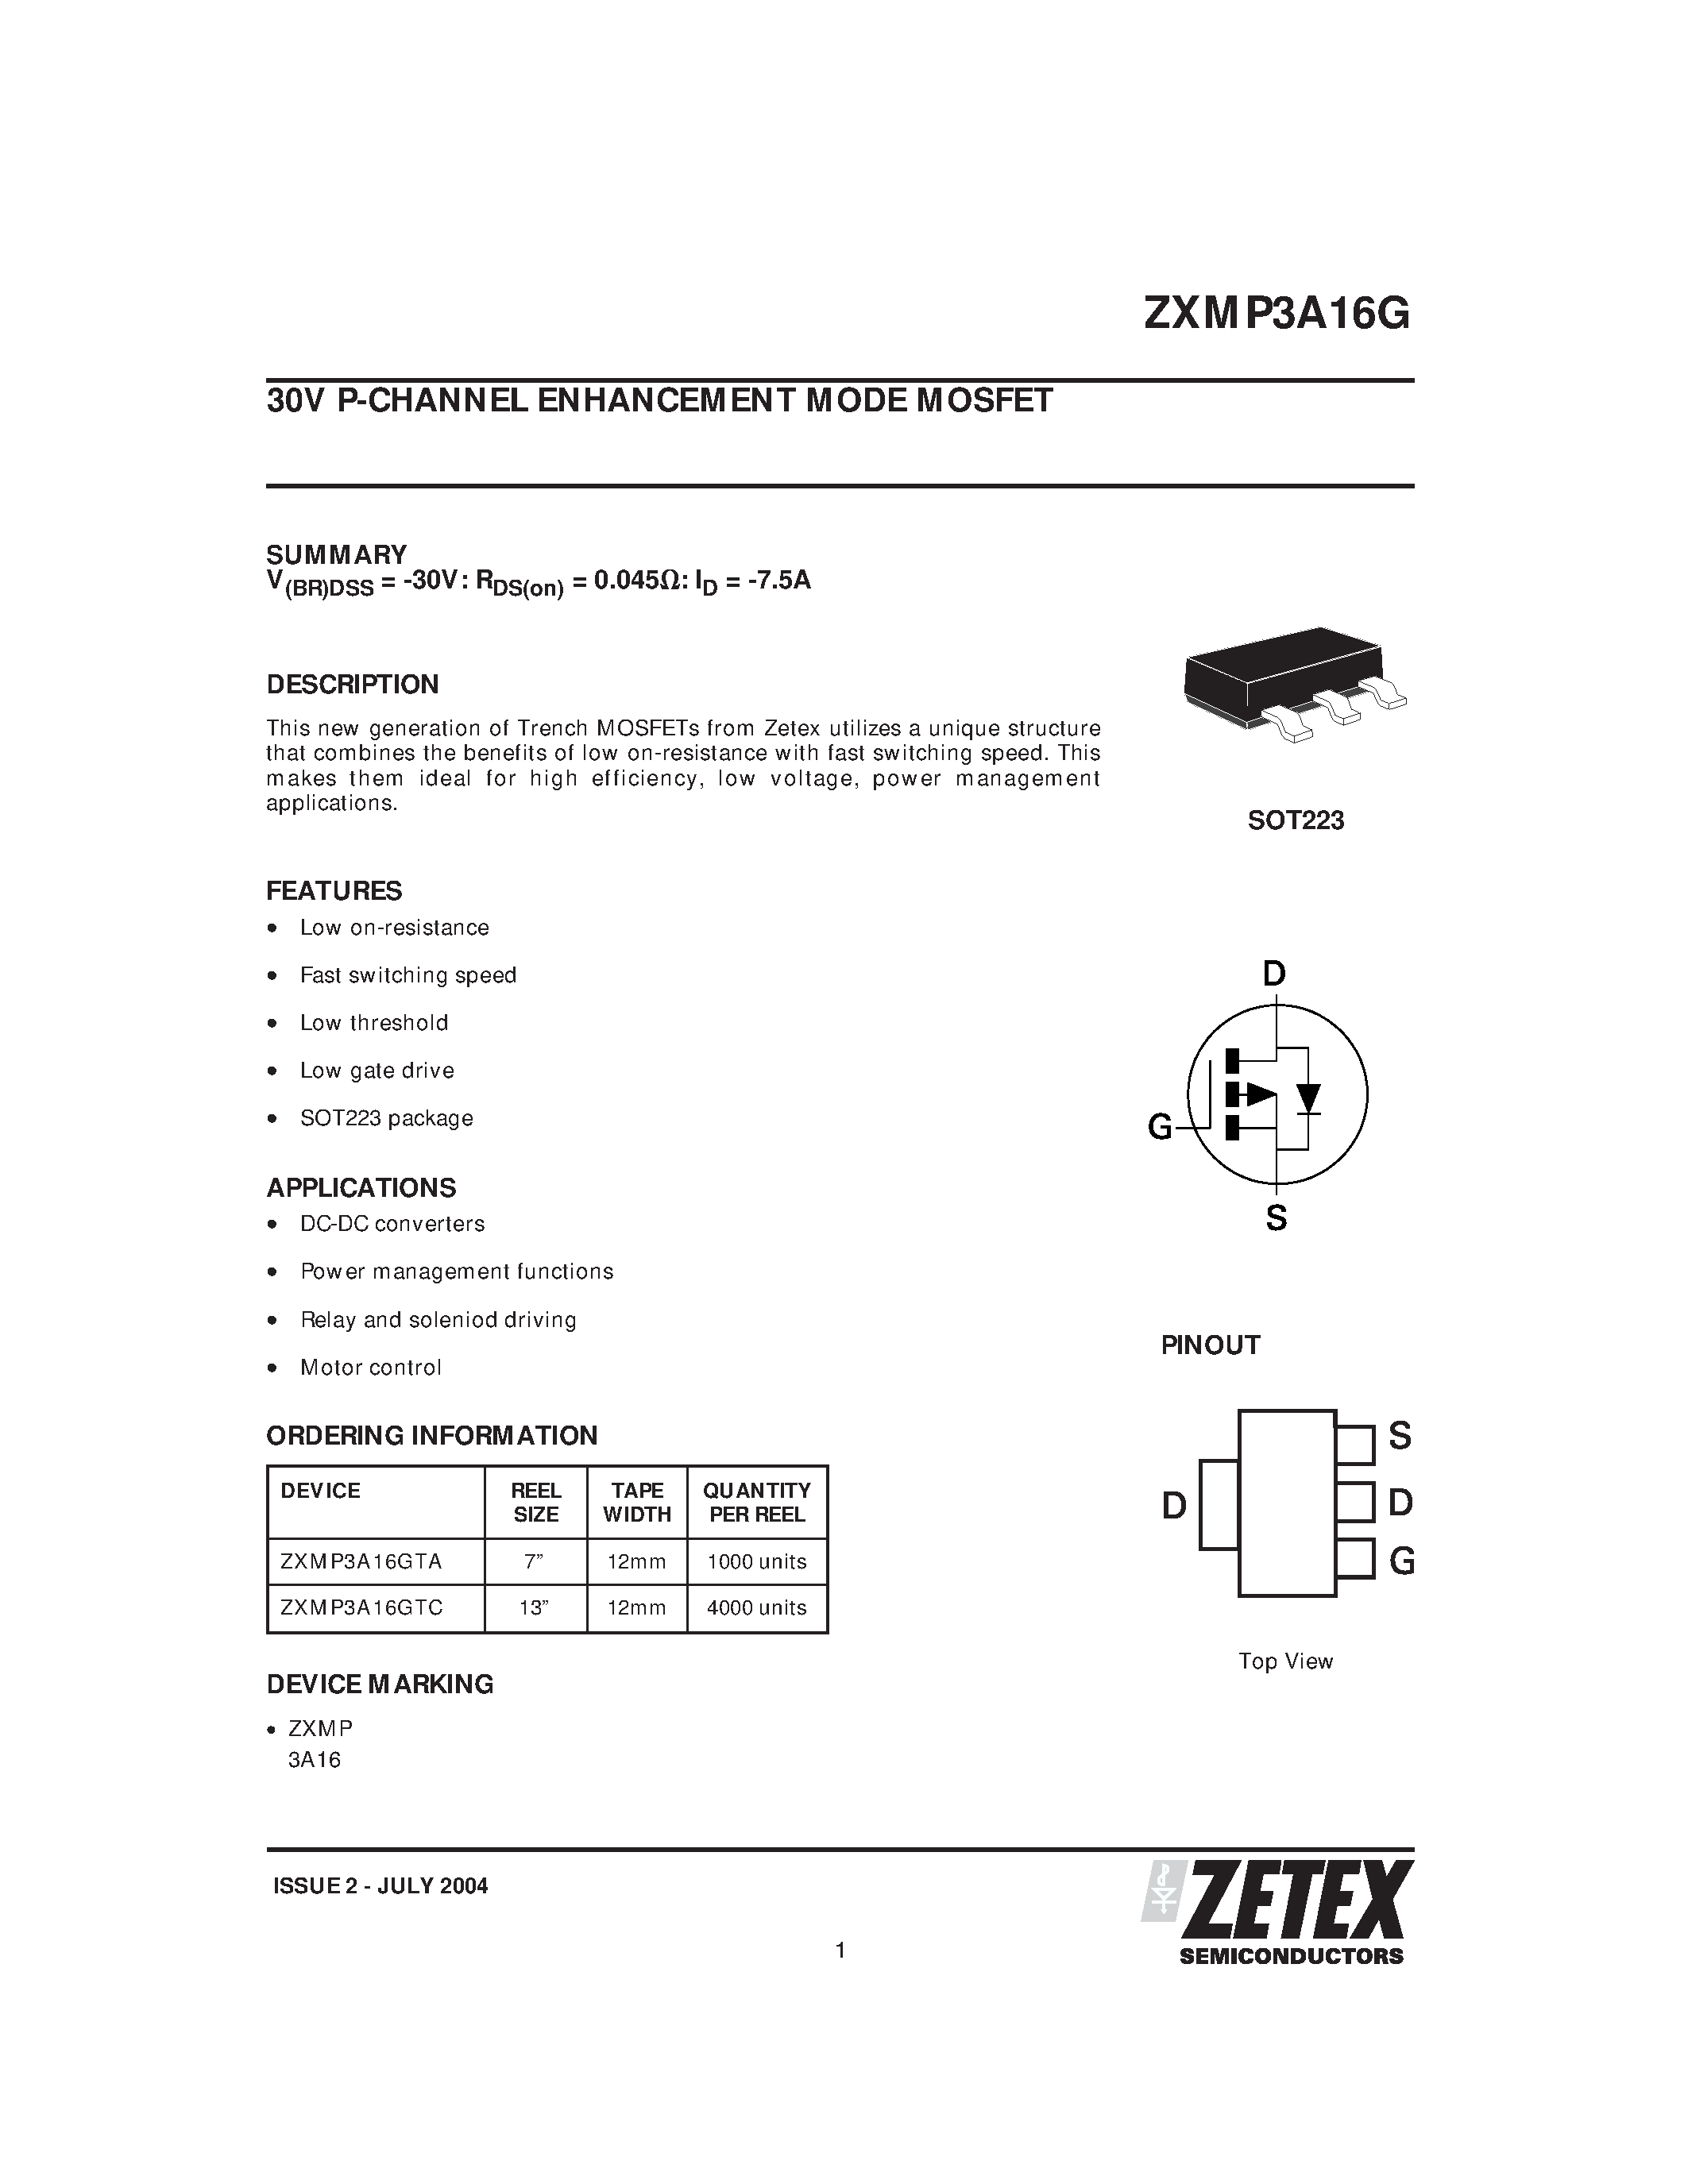 Даташит ZXMP3A16G - 30V P-CHANNEL ENHANCEMENT MODE MOSFET страница 1